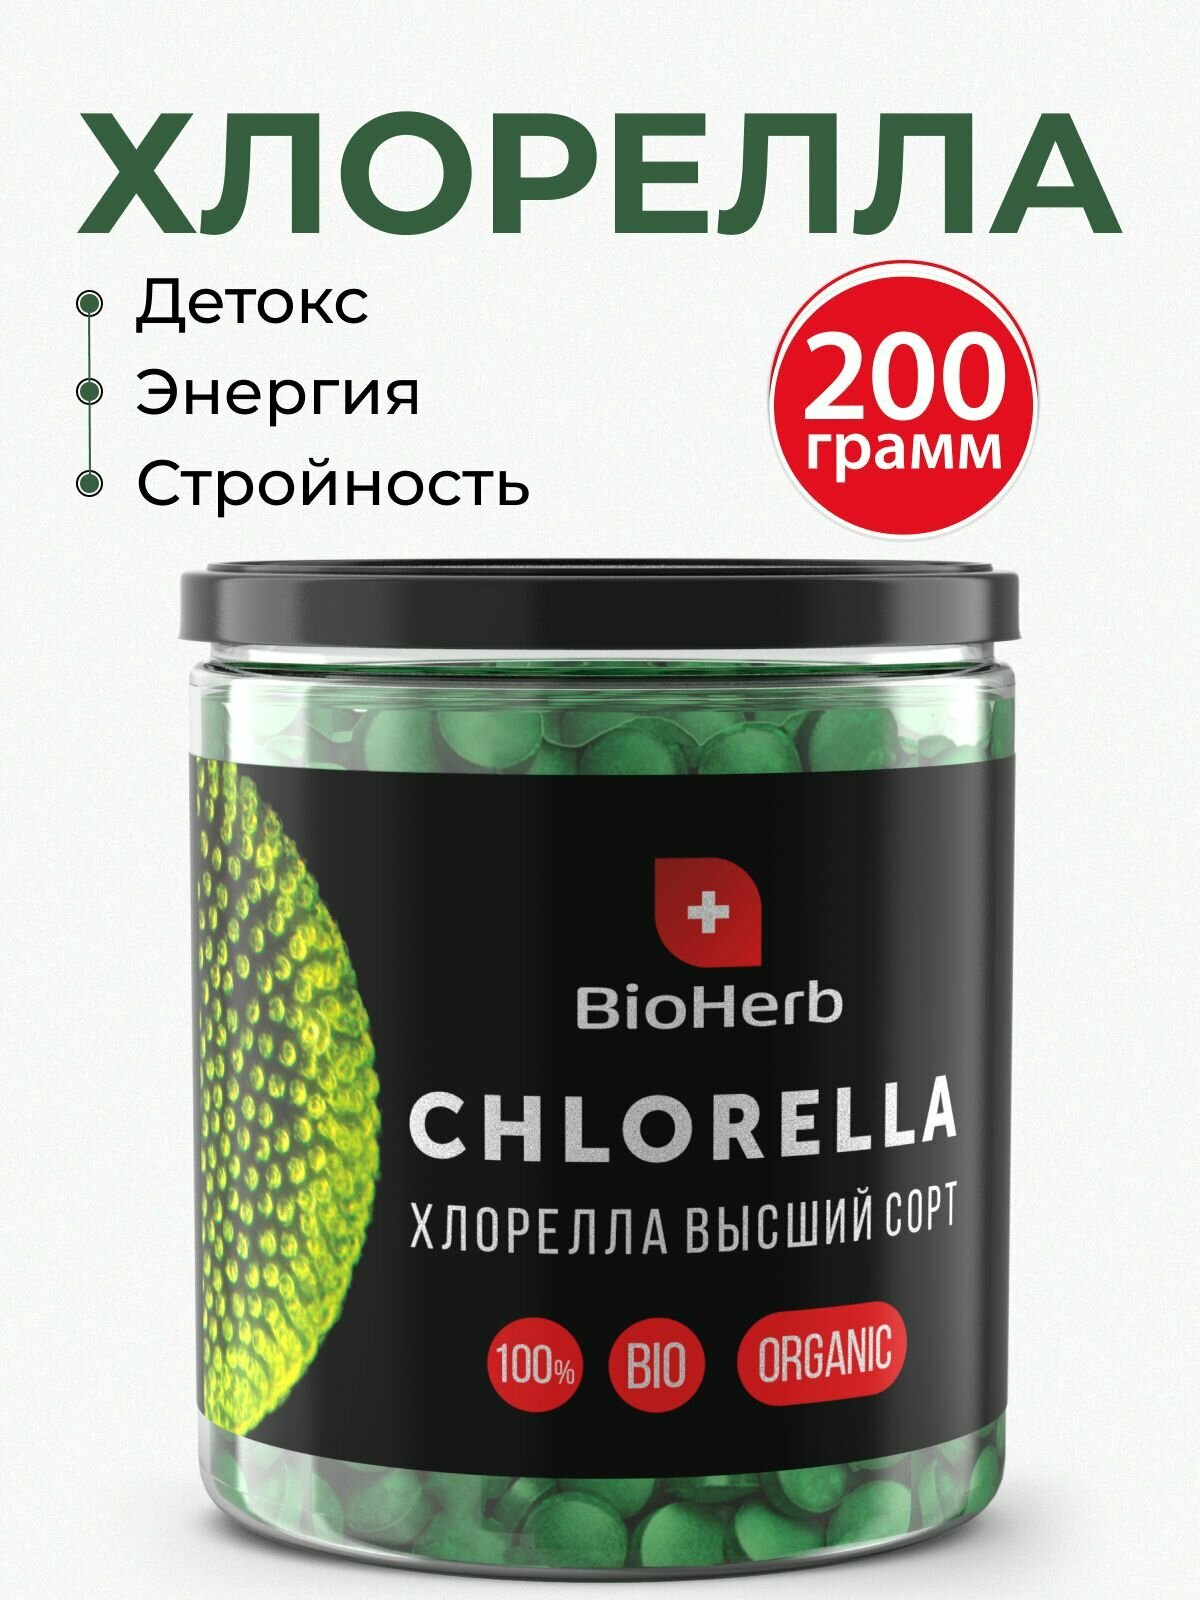 BioHerb Хлорелла в таблетках, для похудения, 100% натуральная, 200 г (800 таб)